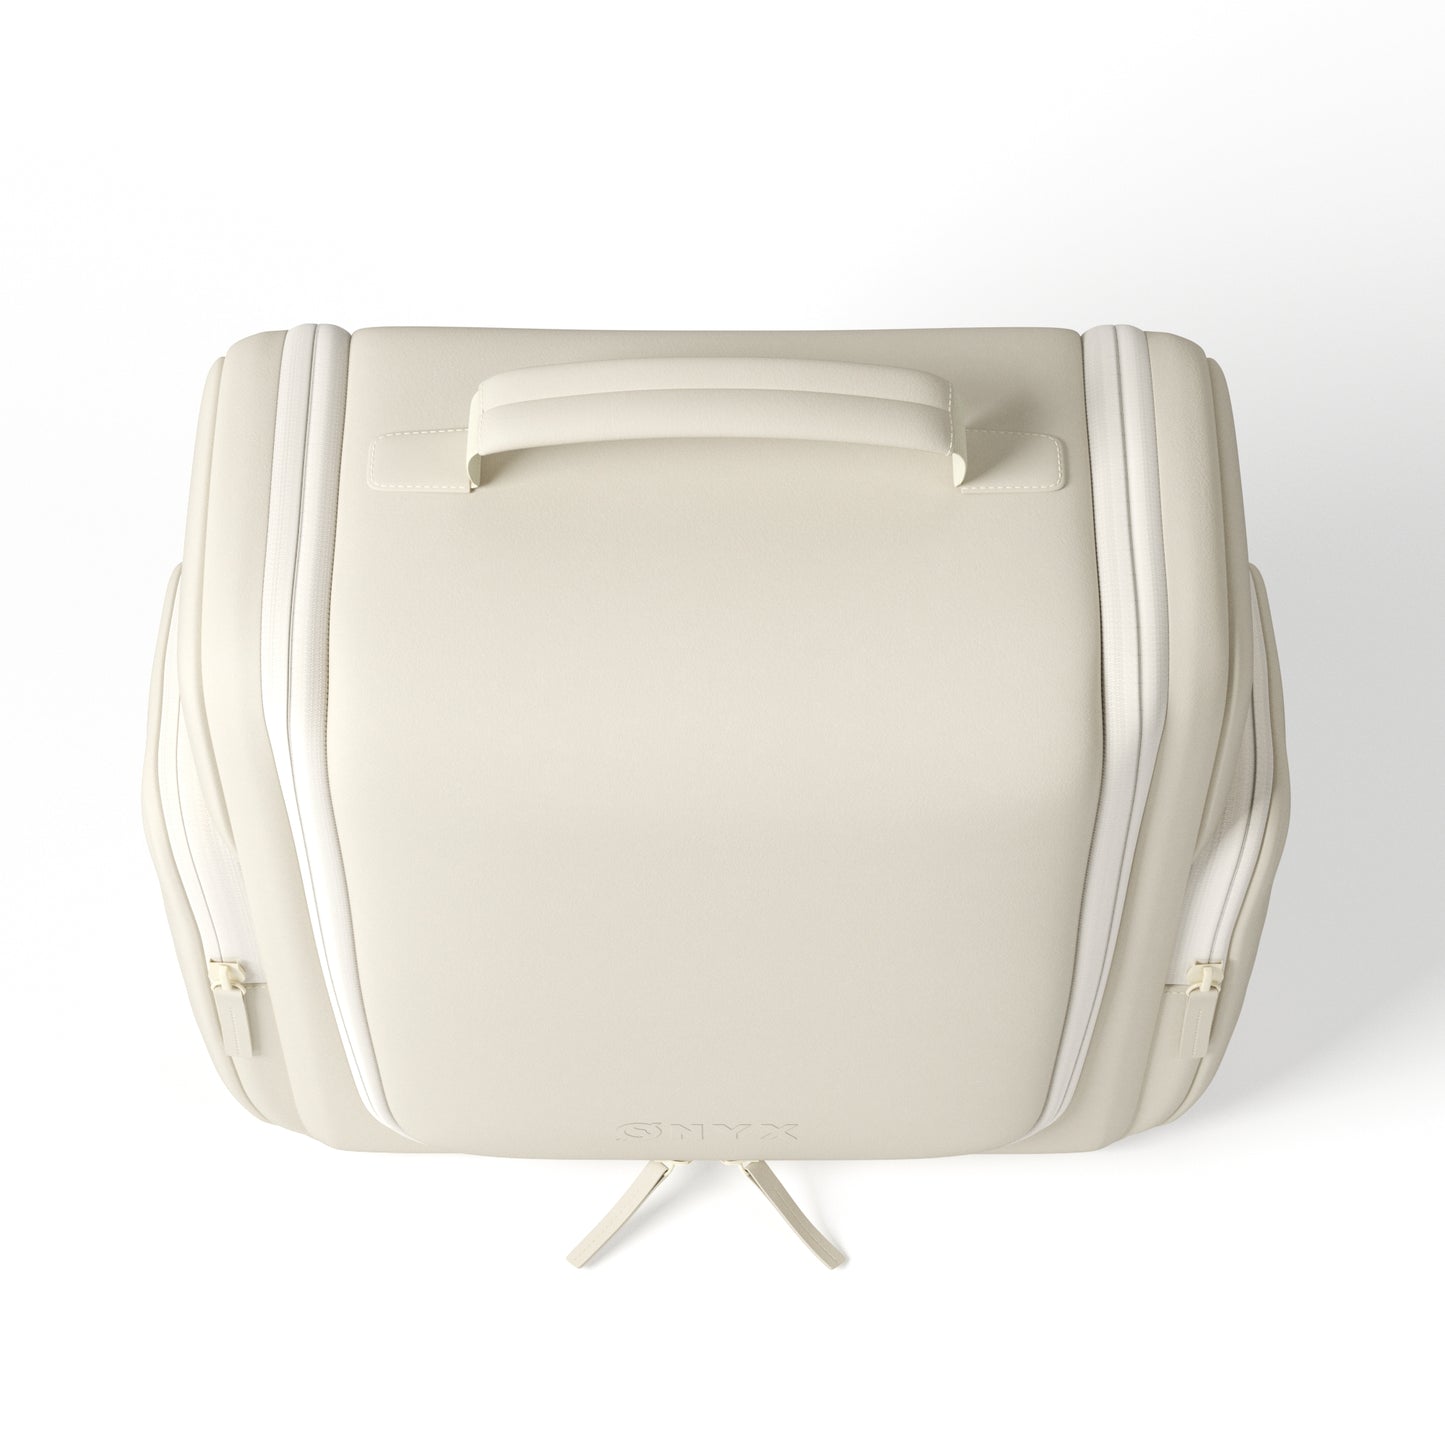 Toilettas / cosmetica organizer - Large - Sand white